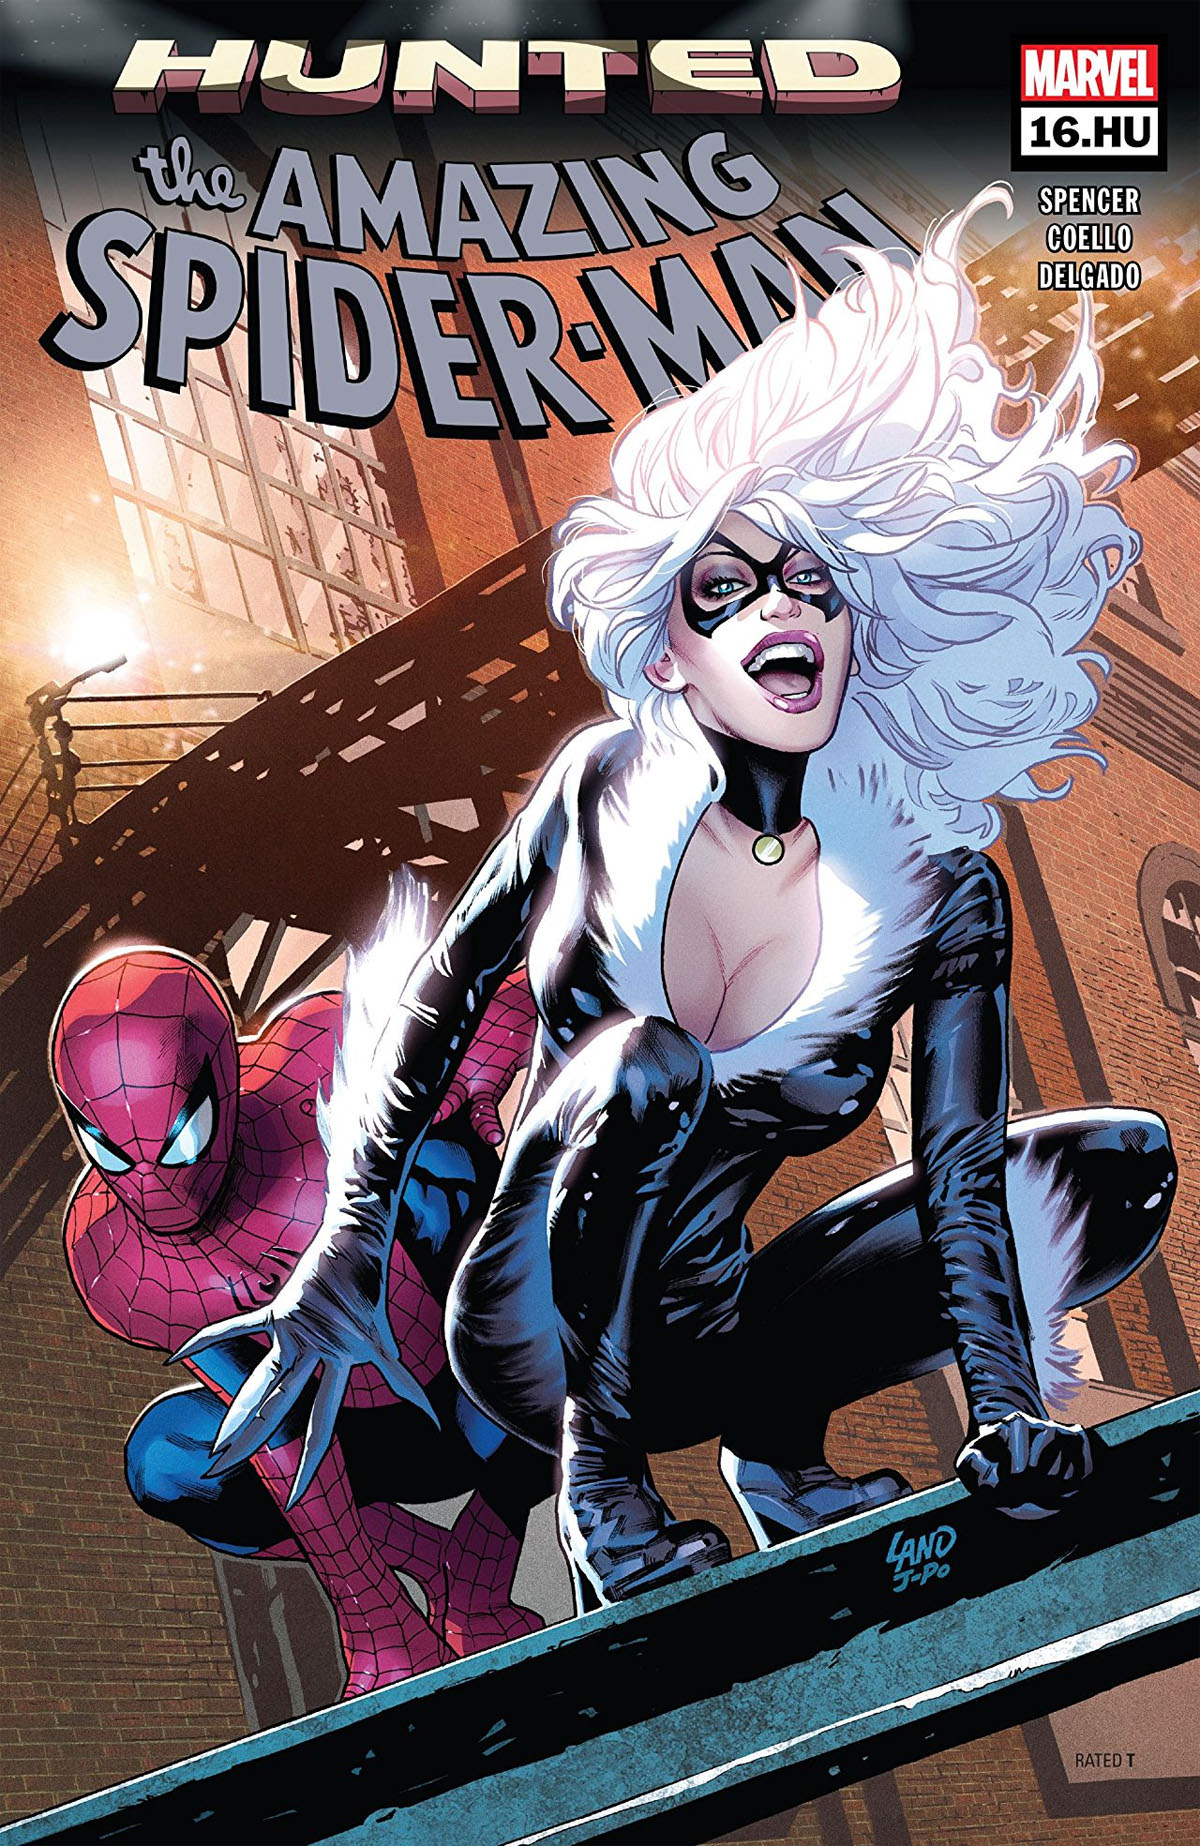 Amazing Spider-Man #16.HU cover